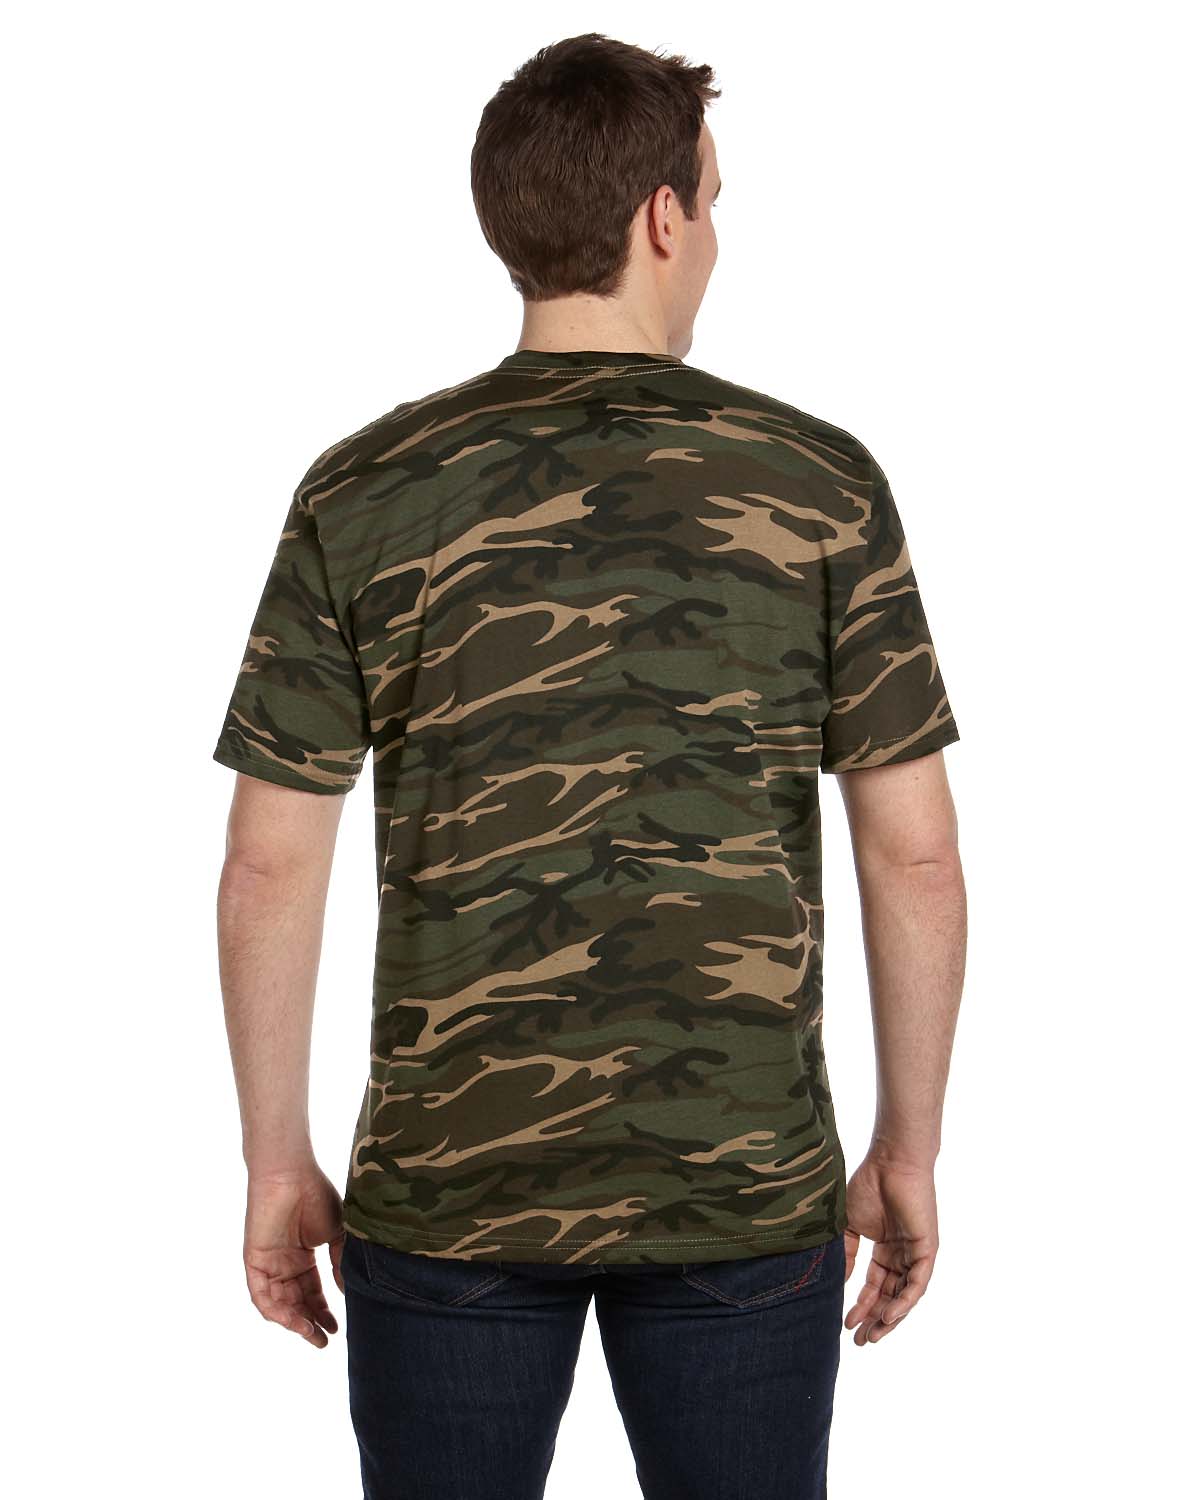 Anvil Men's Camouflage T-Shirt 100% Cotton Midweight Tee M-939 | eBay